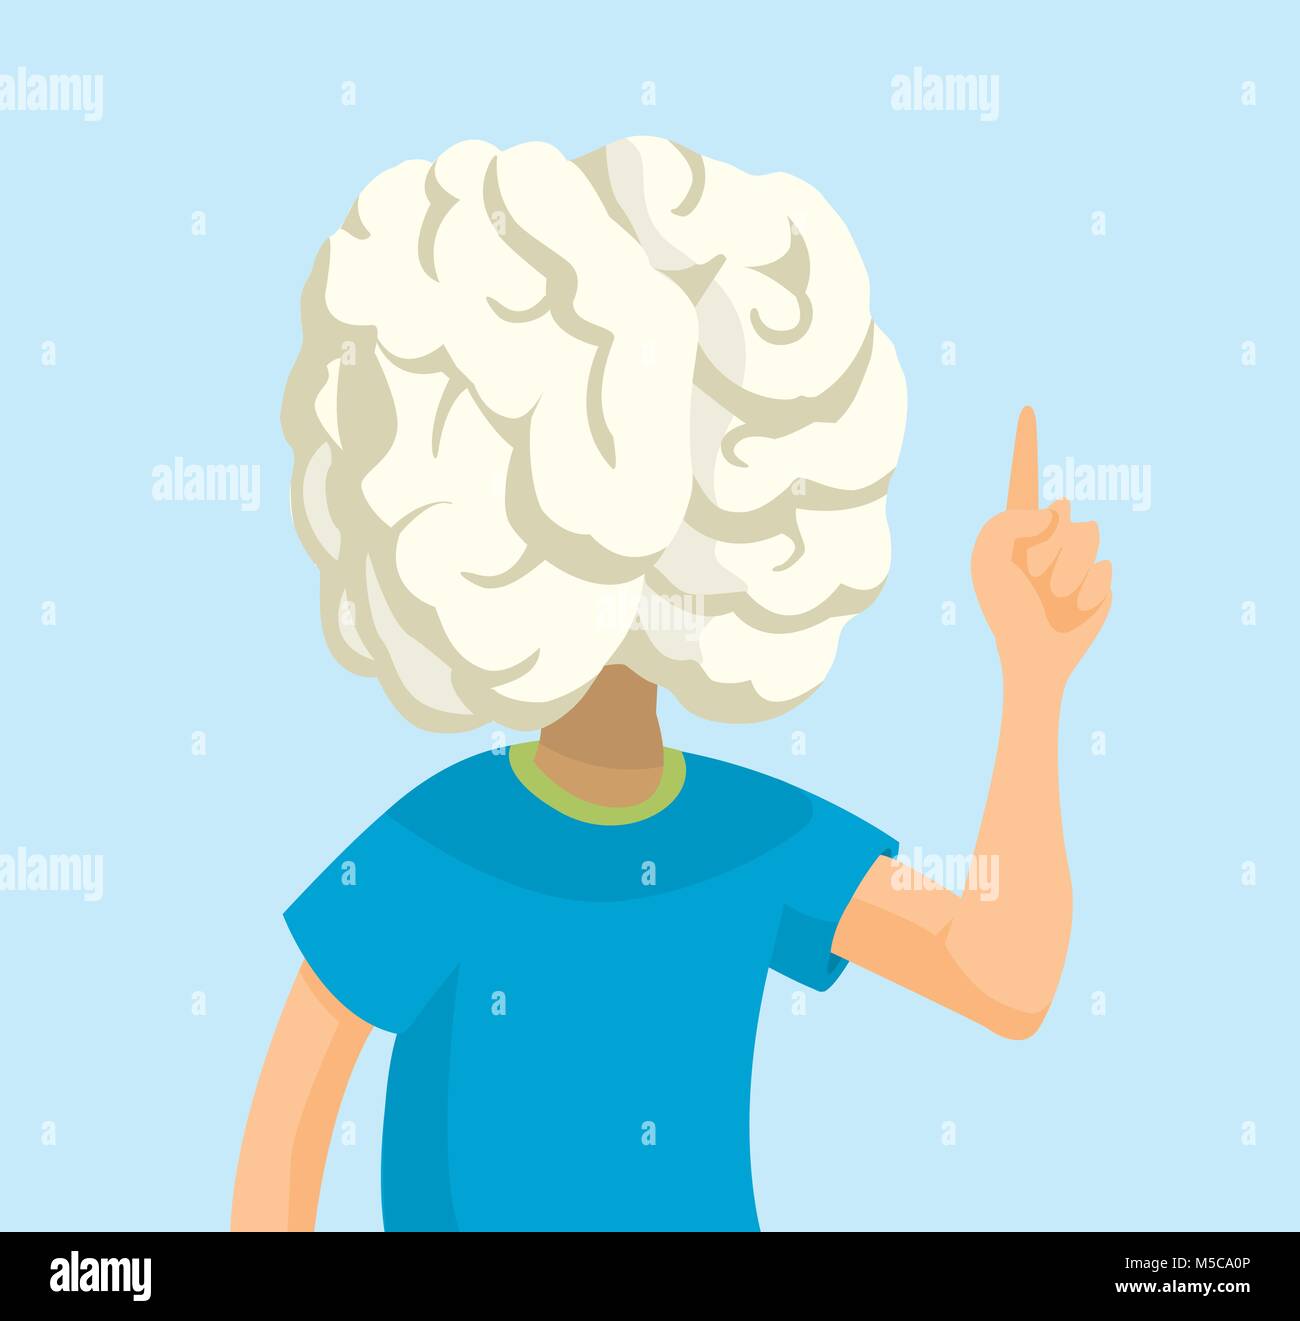 Cartoon illustration of brainy man showing off intelligence Stock Vector